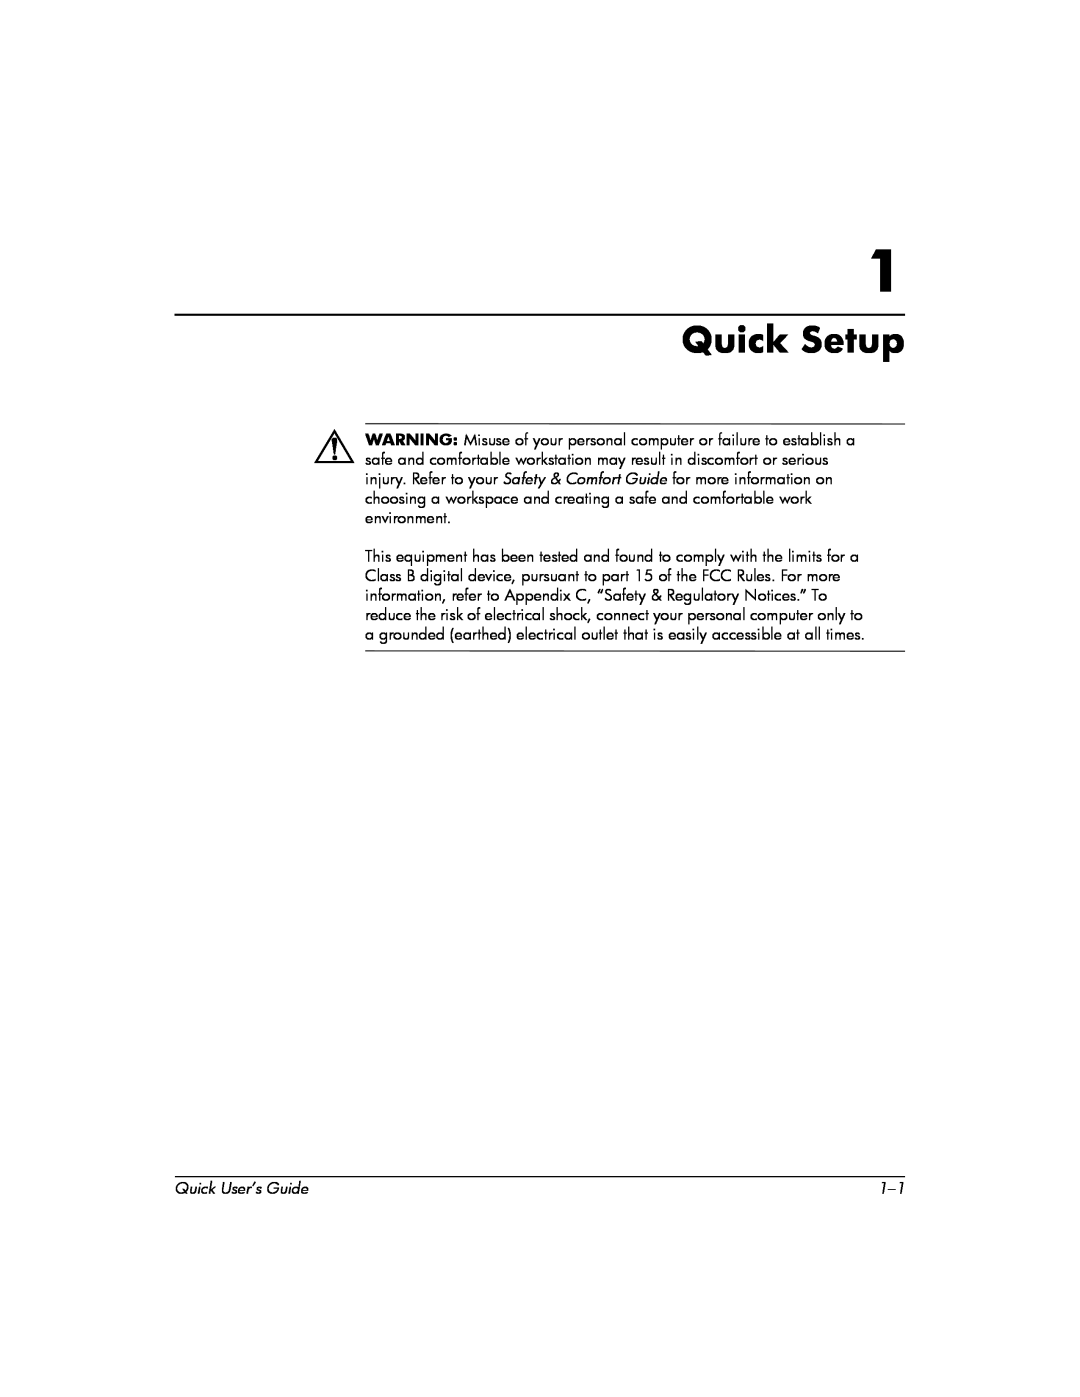 Compaq D510 e-pc manual Quick Setup, Quick User’s Guide 